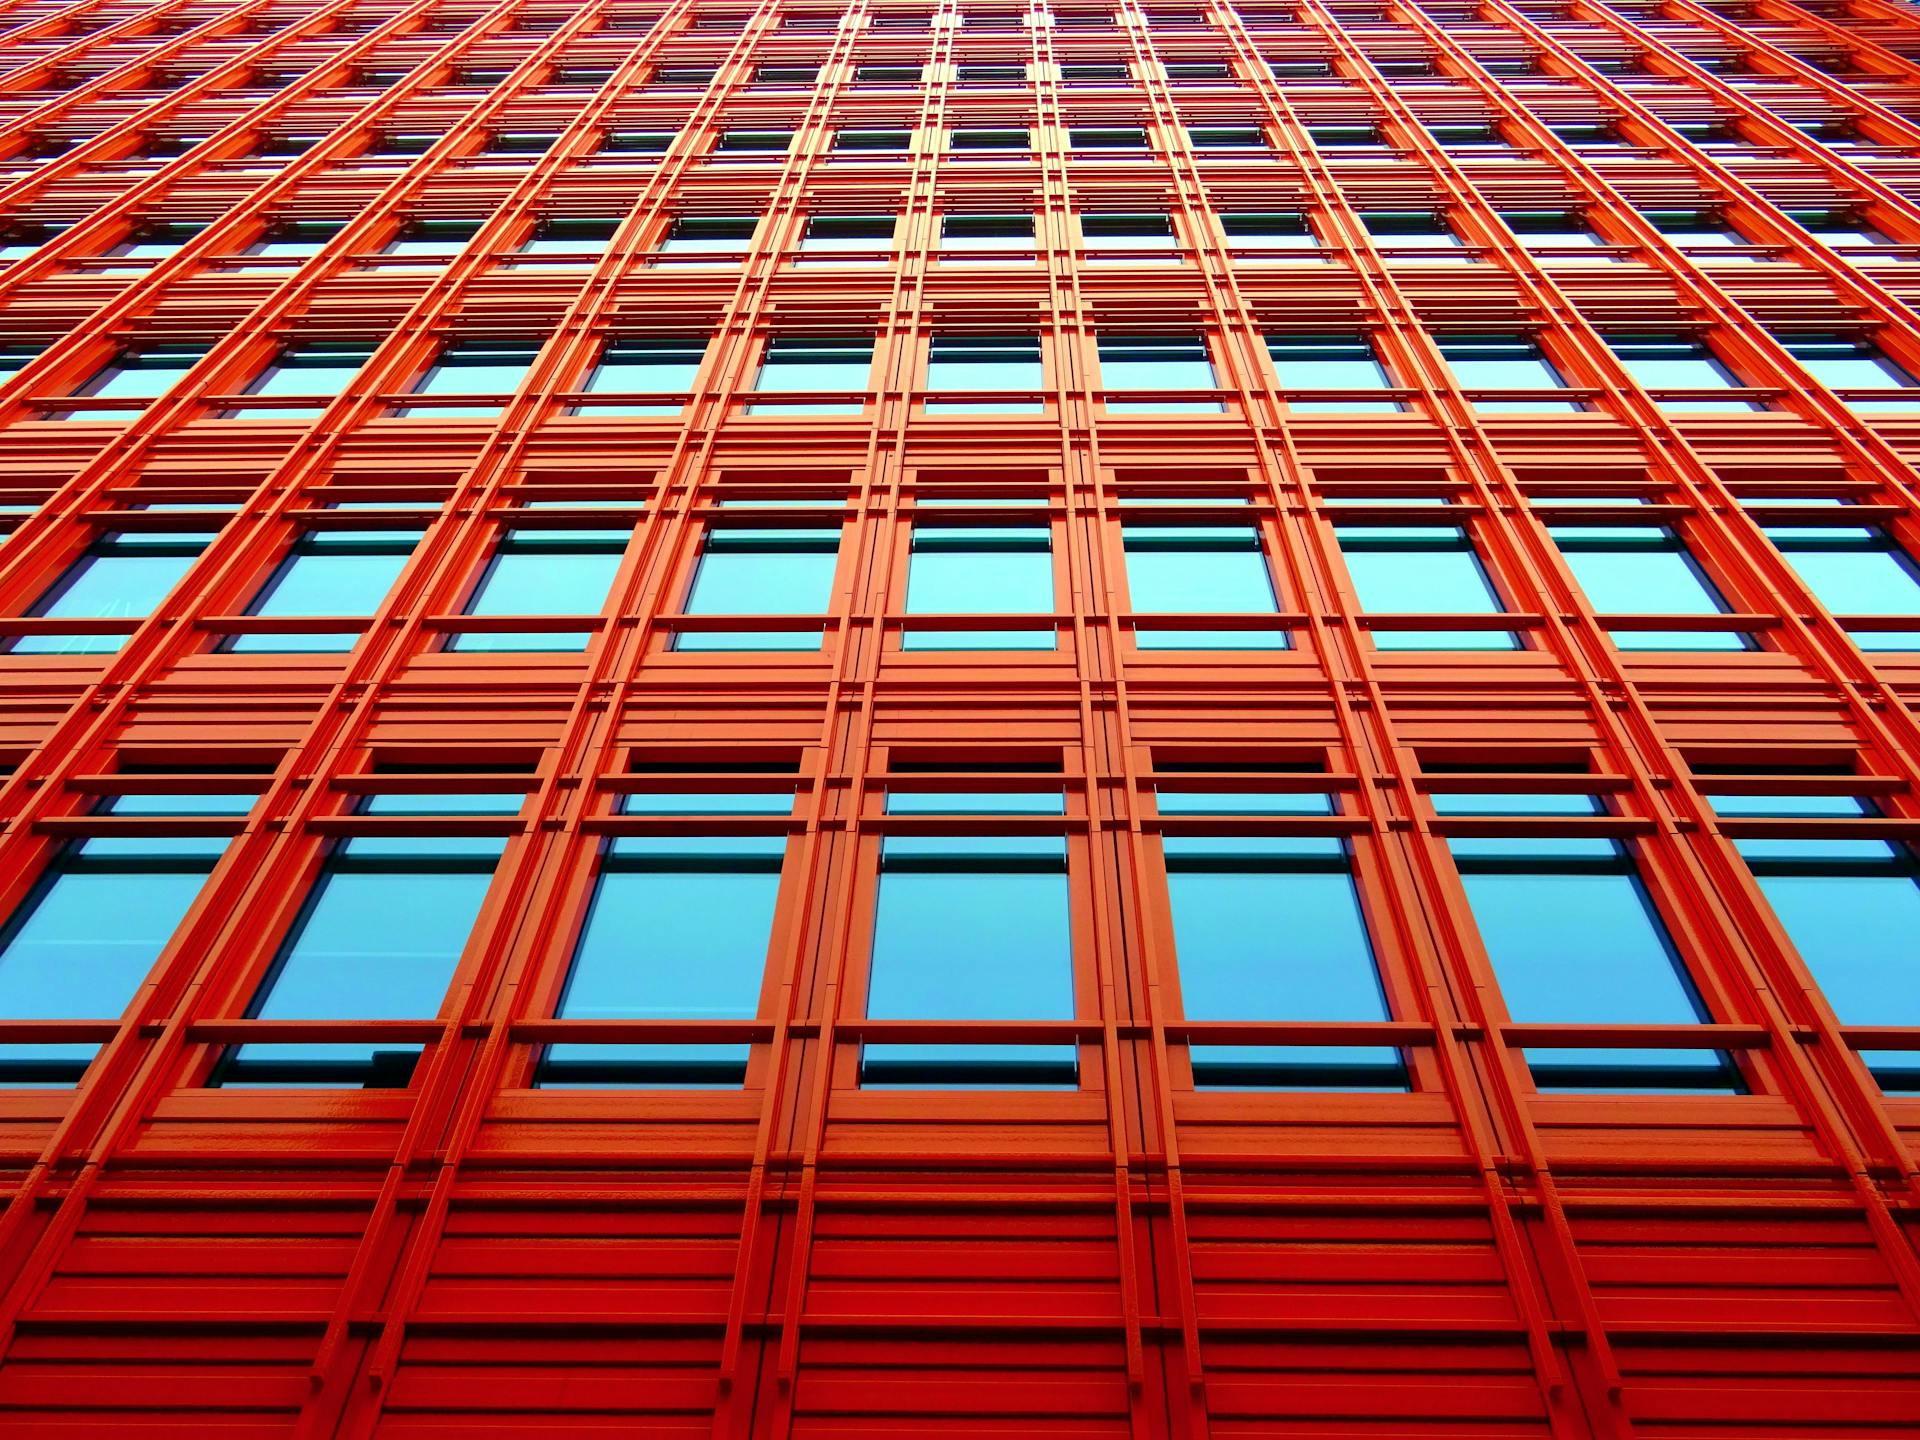 Multiple windows on an orange building